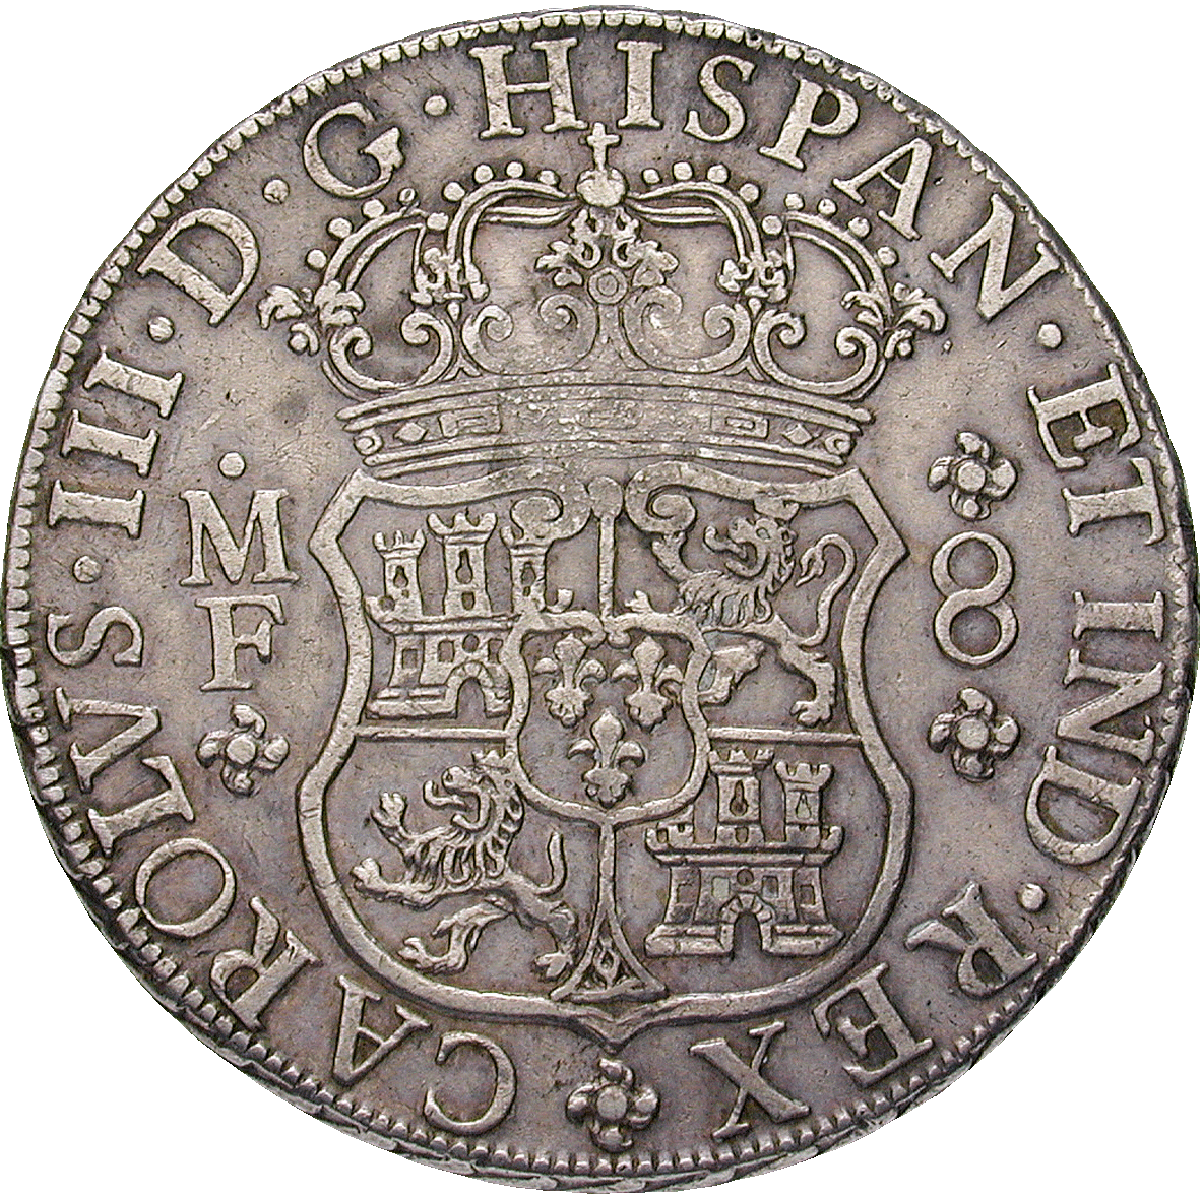 Mozambique, José I of Portugal, Real de a ocho (Peso) 1765 with Mozambican Countermark (obverse)